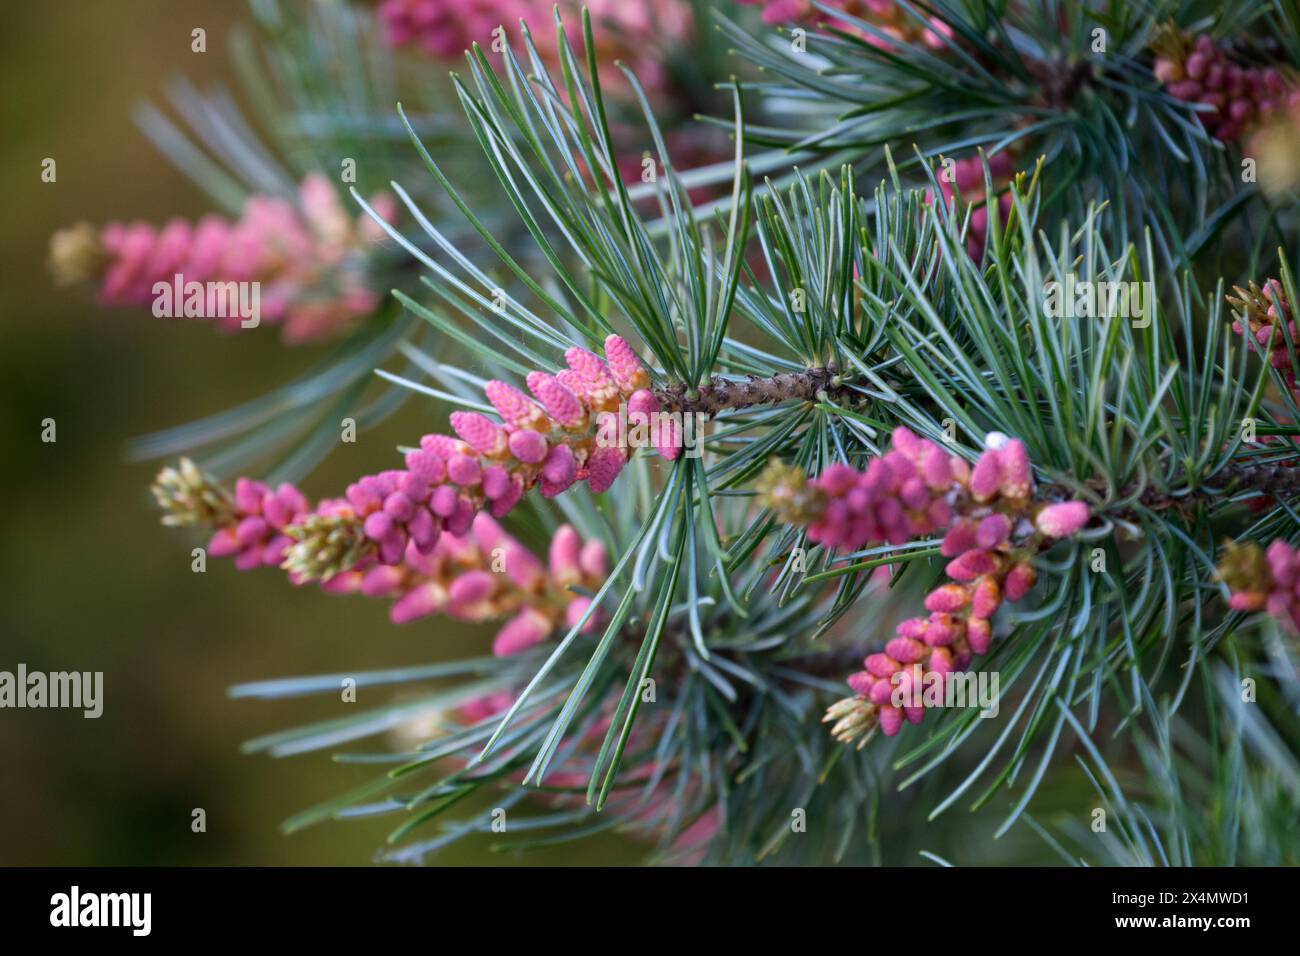 Japanese White Pine Cones Male Cones Pinus parviflora 'Glauca' Stock Photo